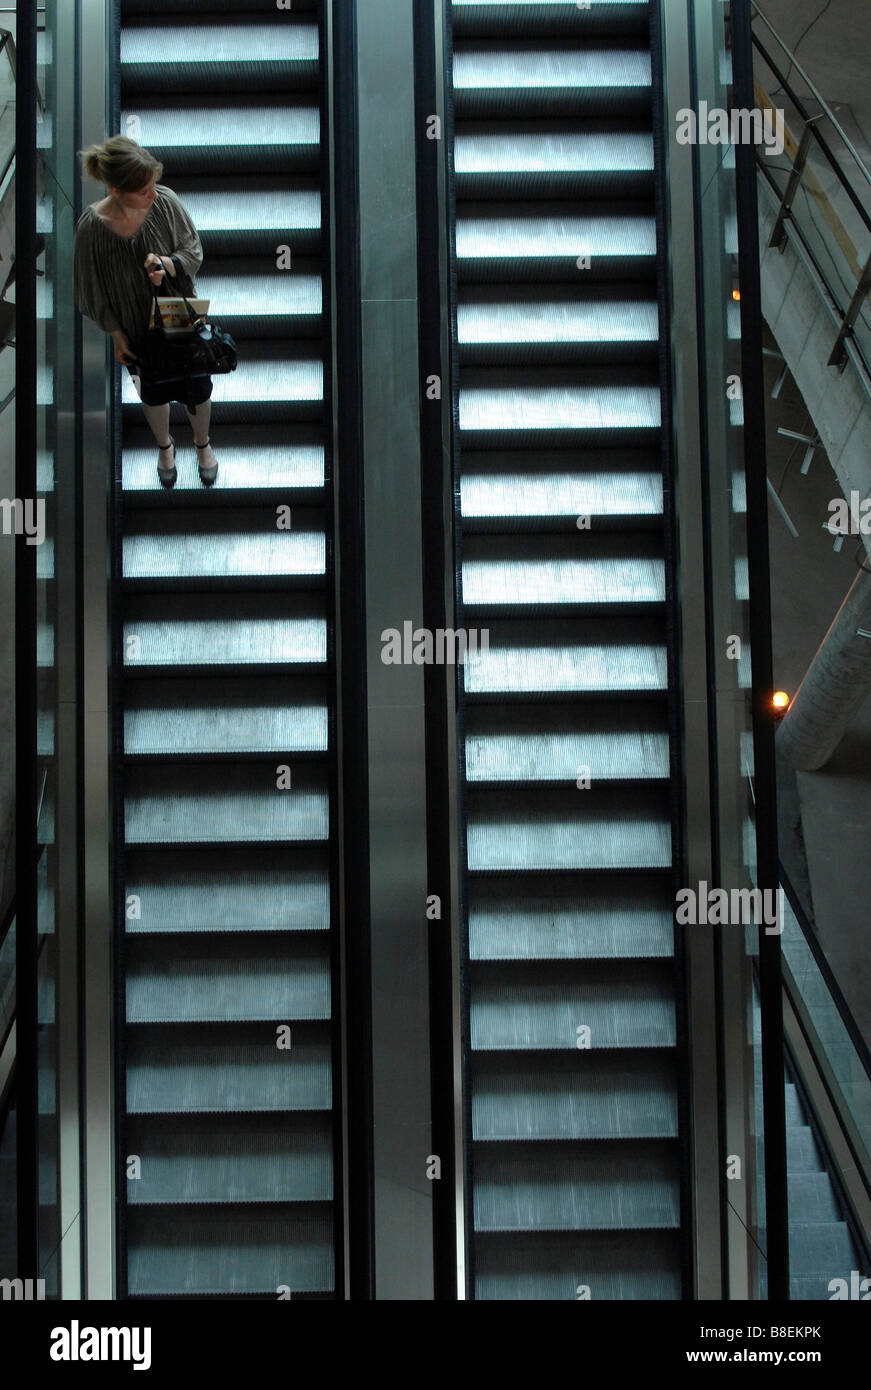 Escalators in a shopping centre Stock Photo